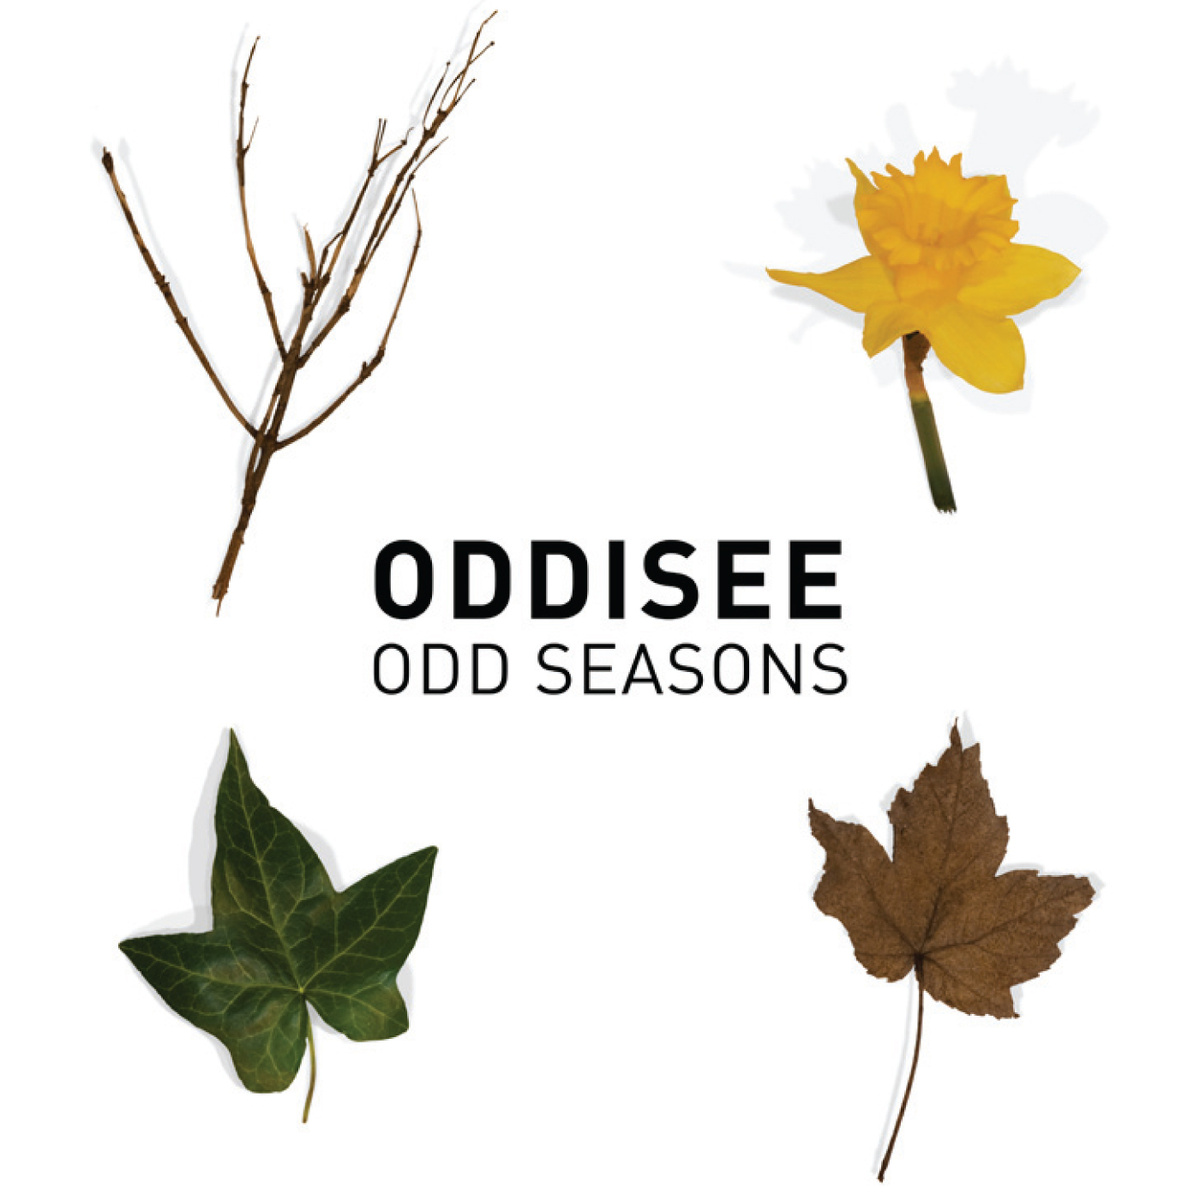 Oddisee "Odd Seasons" Release | @Oddisee